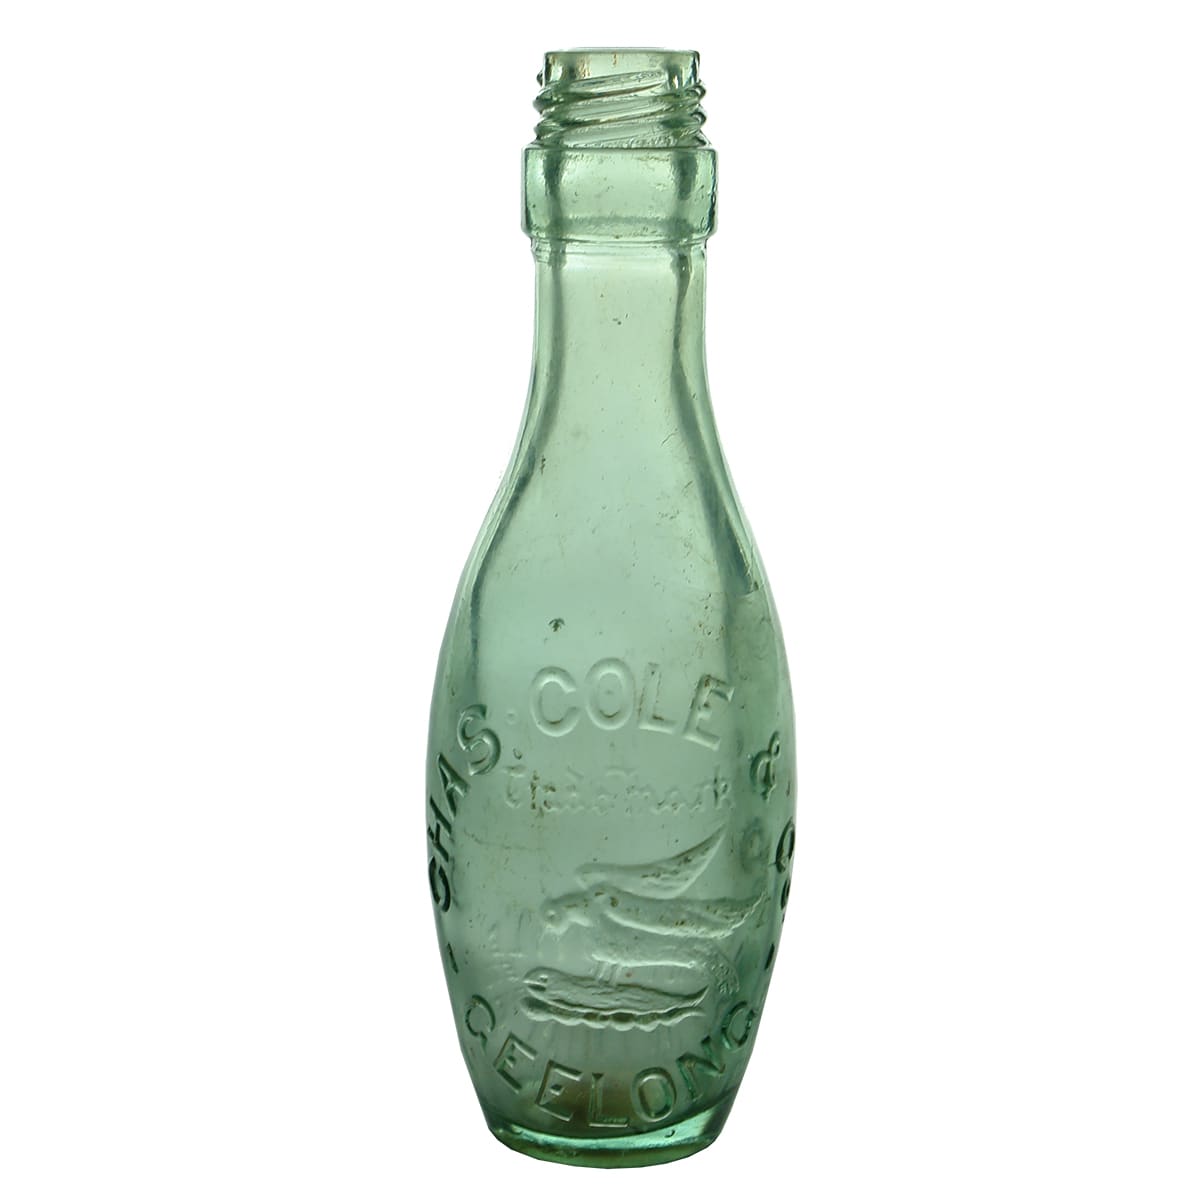 Skittle. Chas Cole & Co., Geelong. Nash Patent. Aqua. 6 oz. (Victoria)